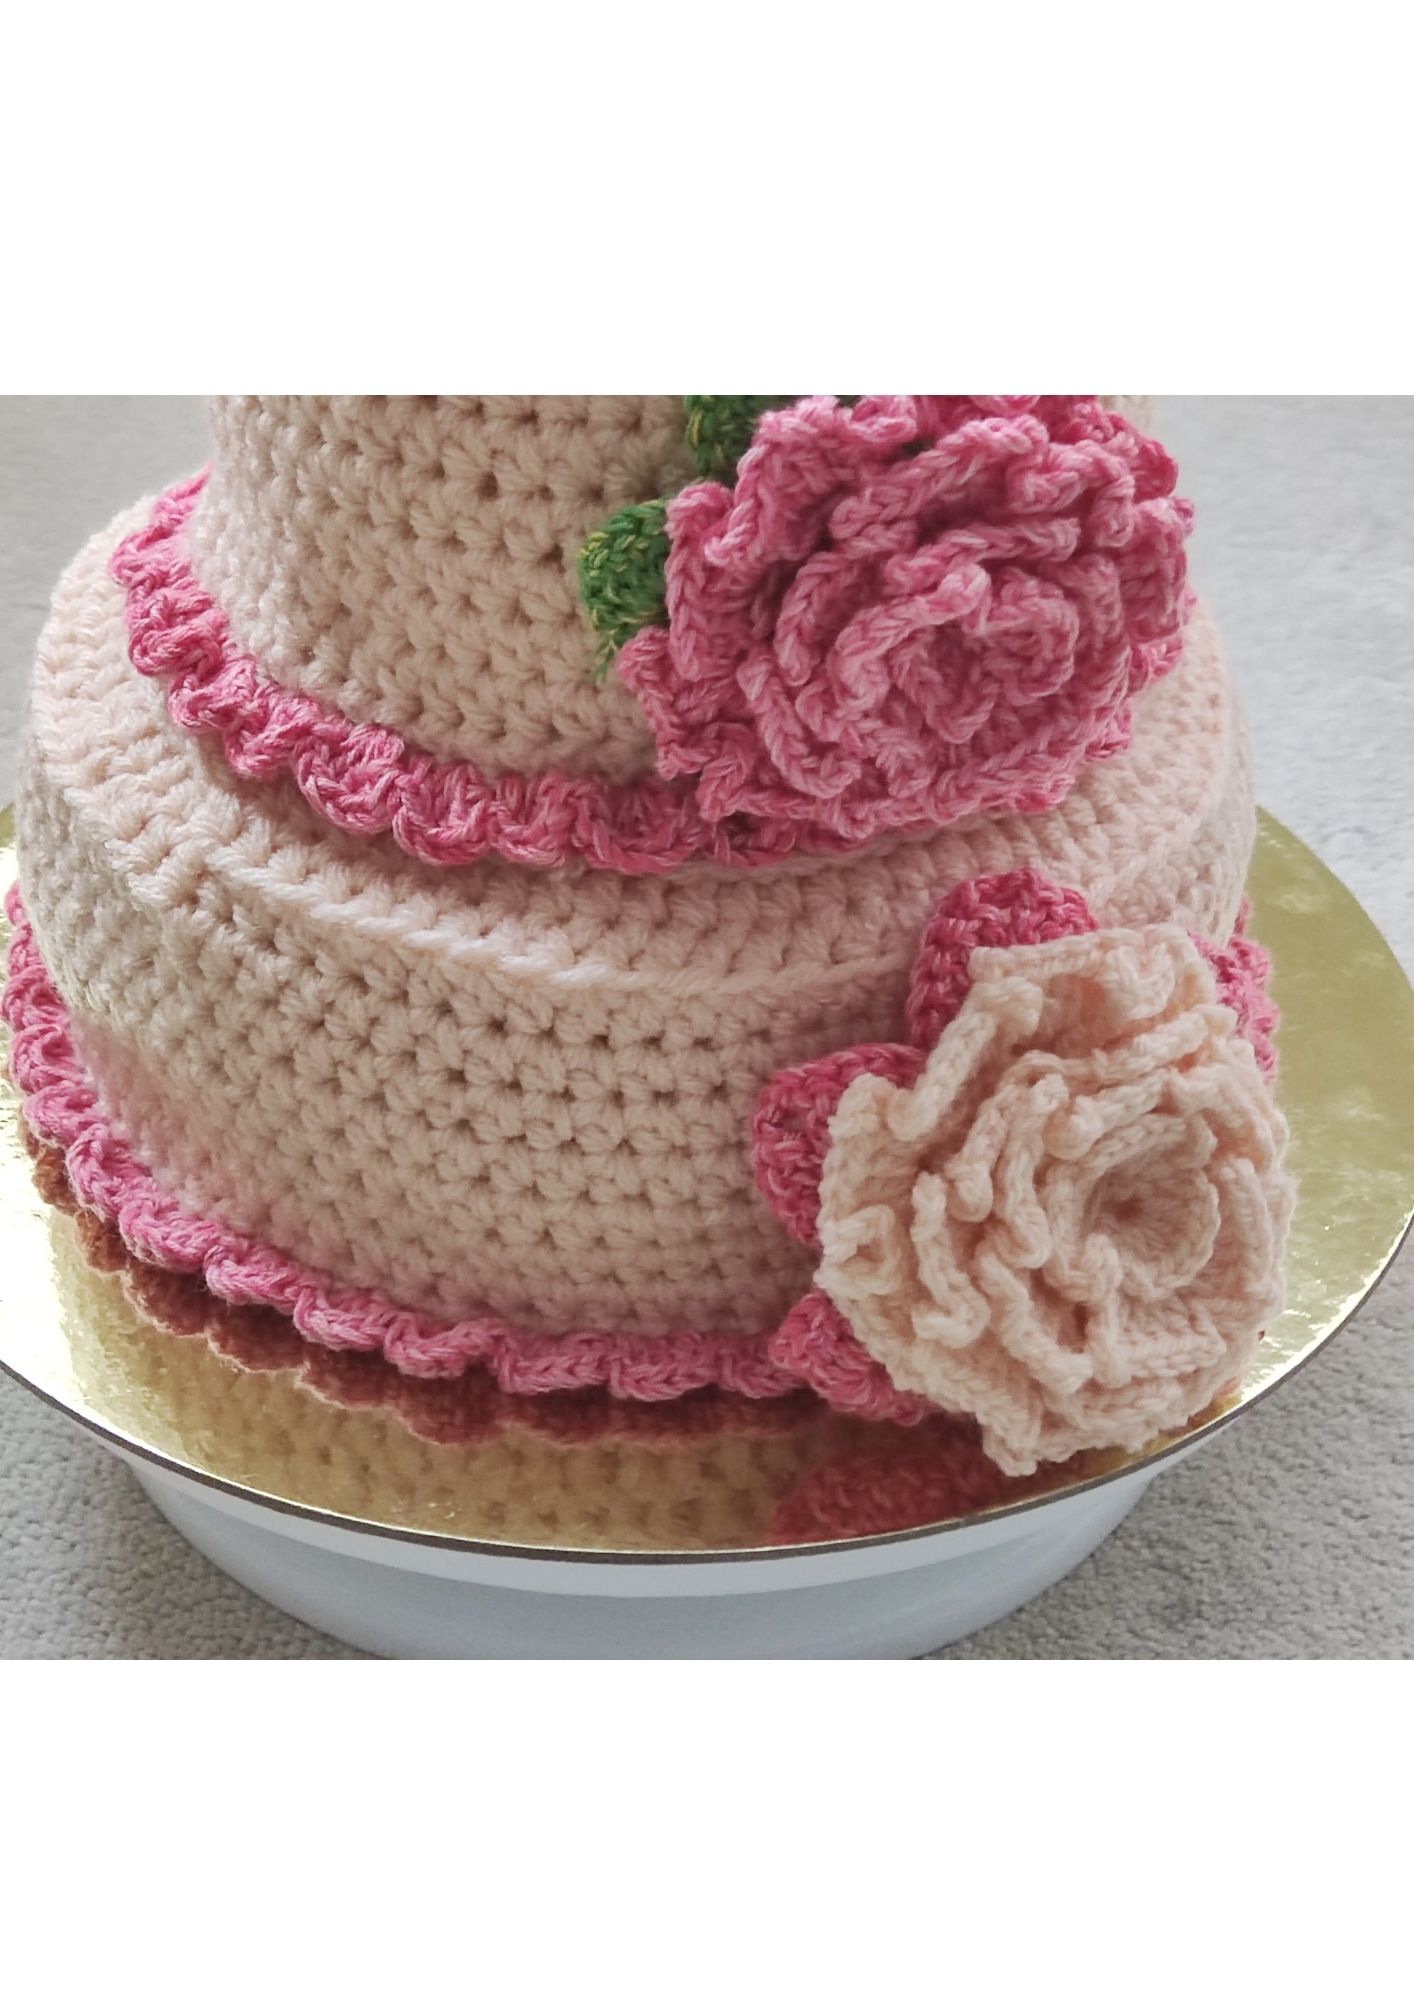 Easy crochet birthday cake